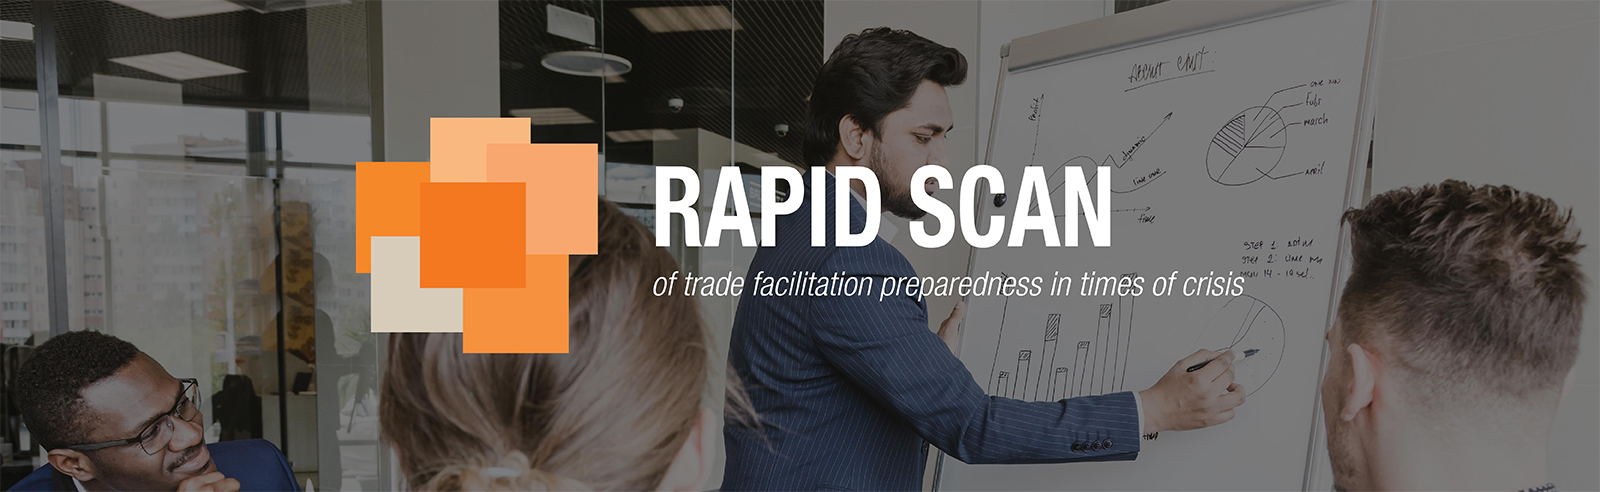 Trade facilitation rapid scan